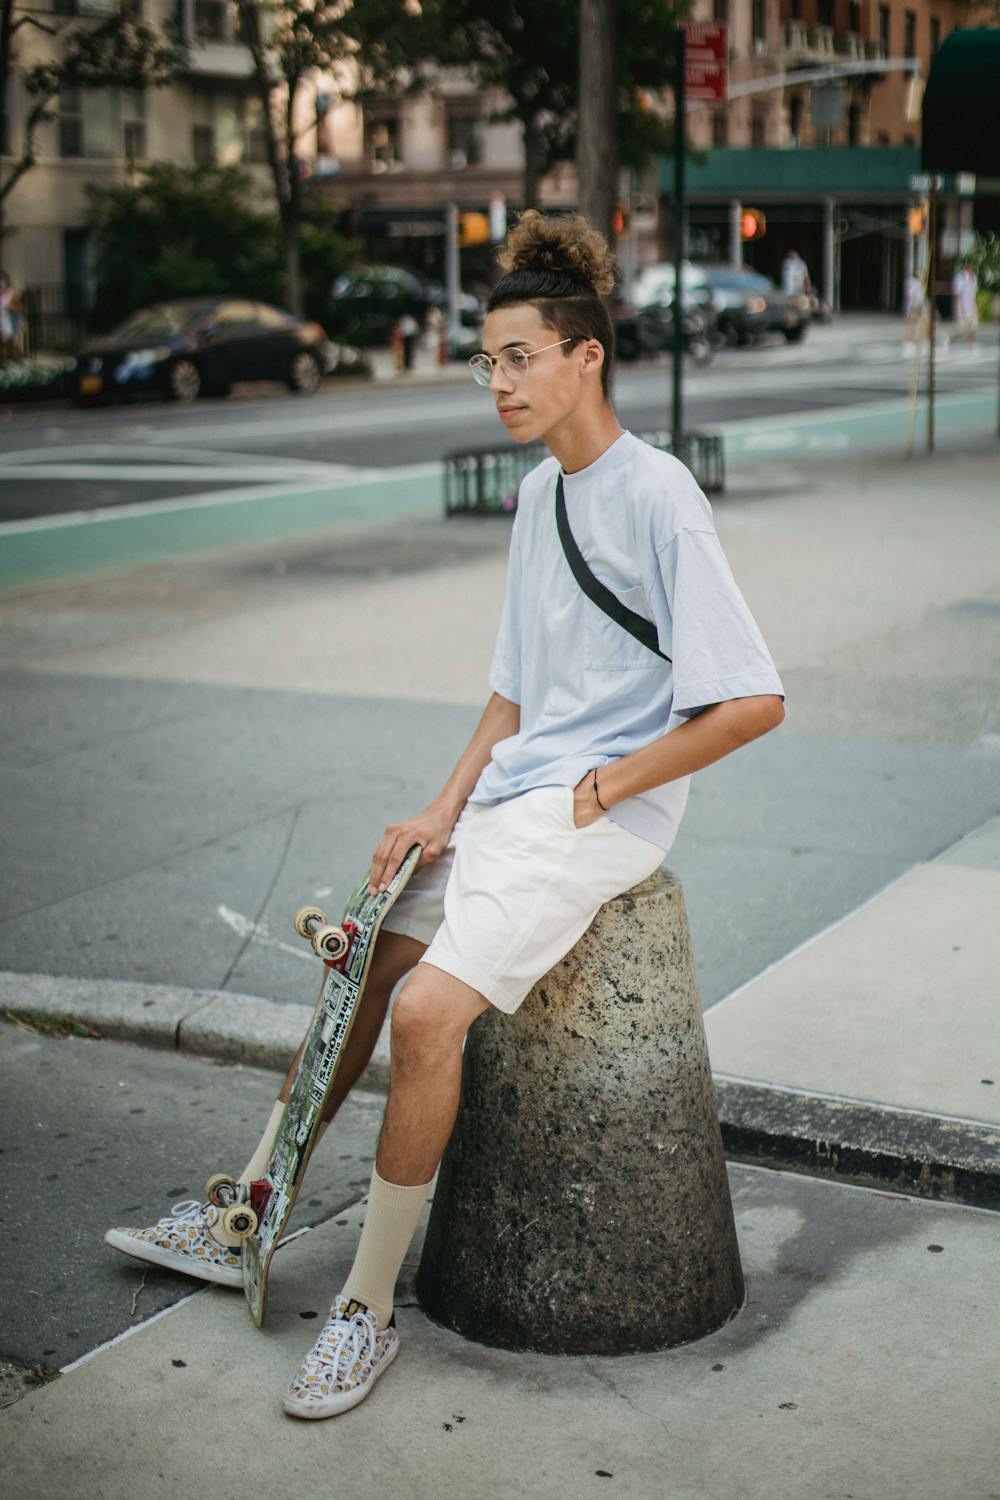 Positive ethnic male skater sitting on street bollard · Free Stock Photo